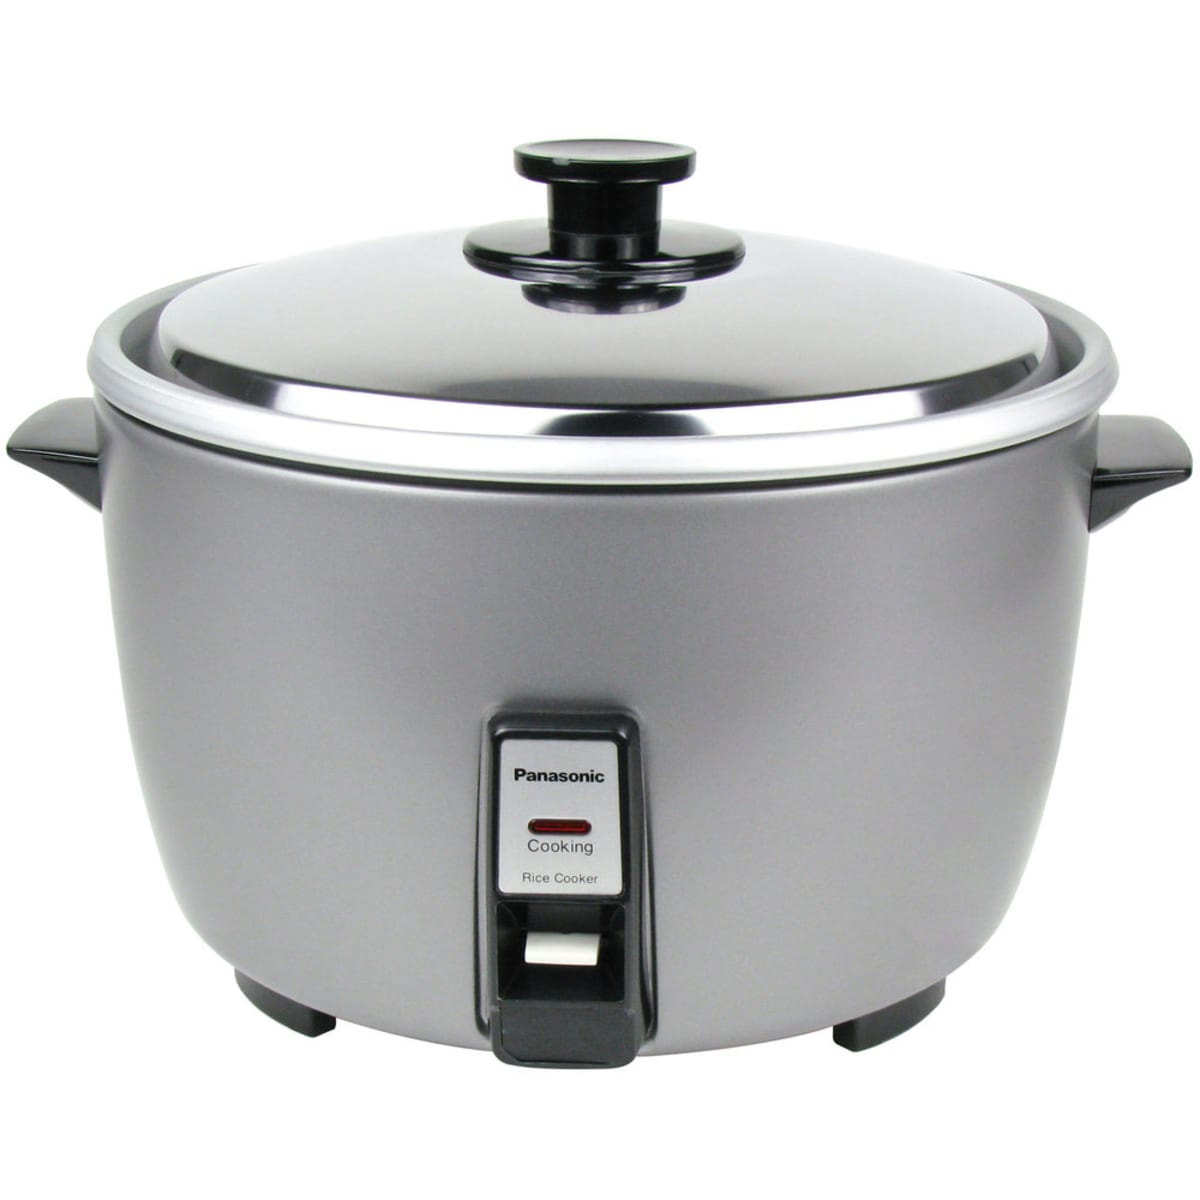 Panasonic Rice Cooker SR-GB54FH